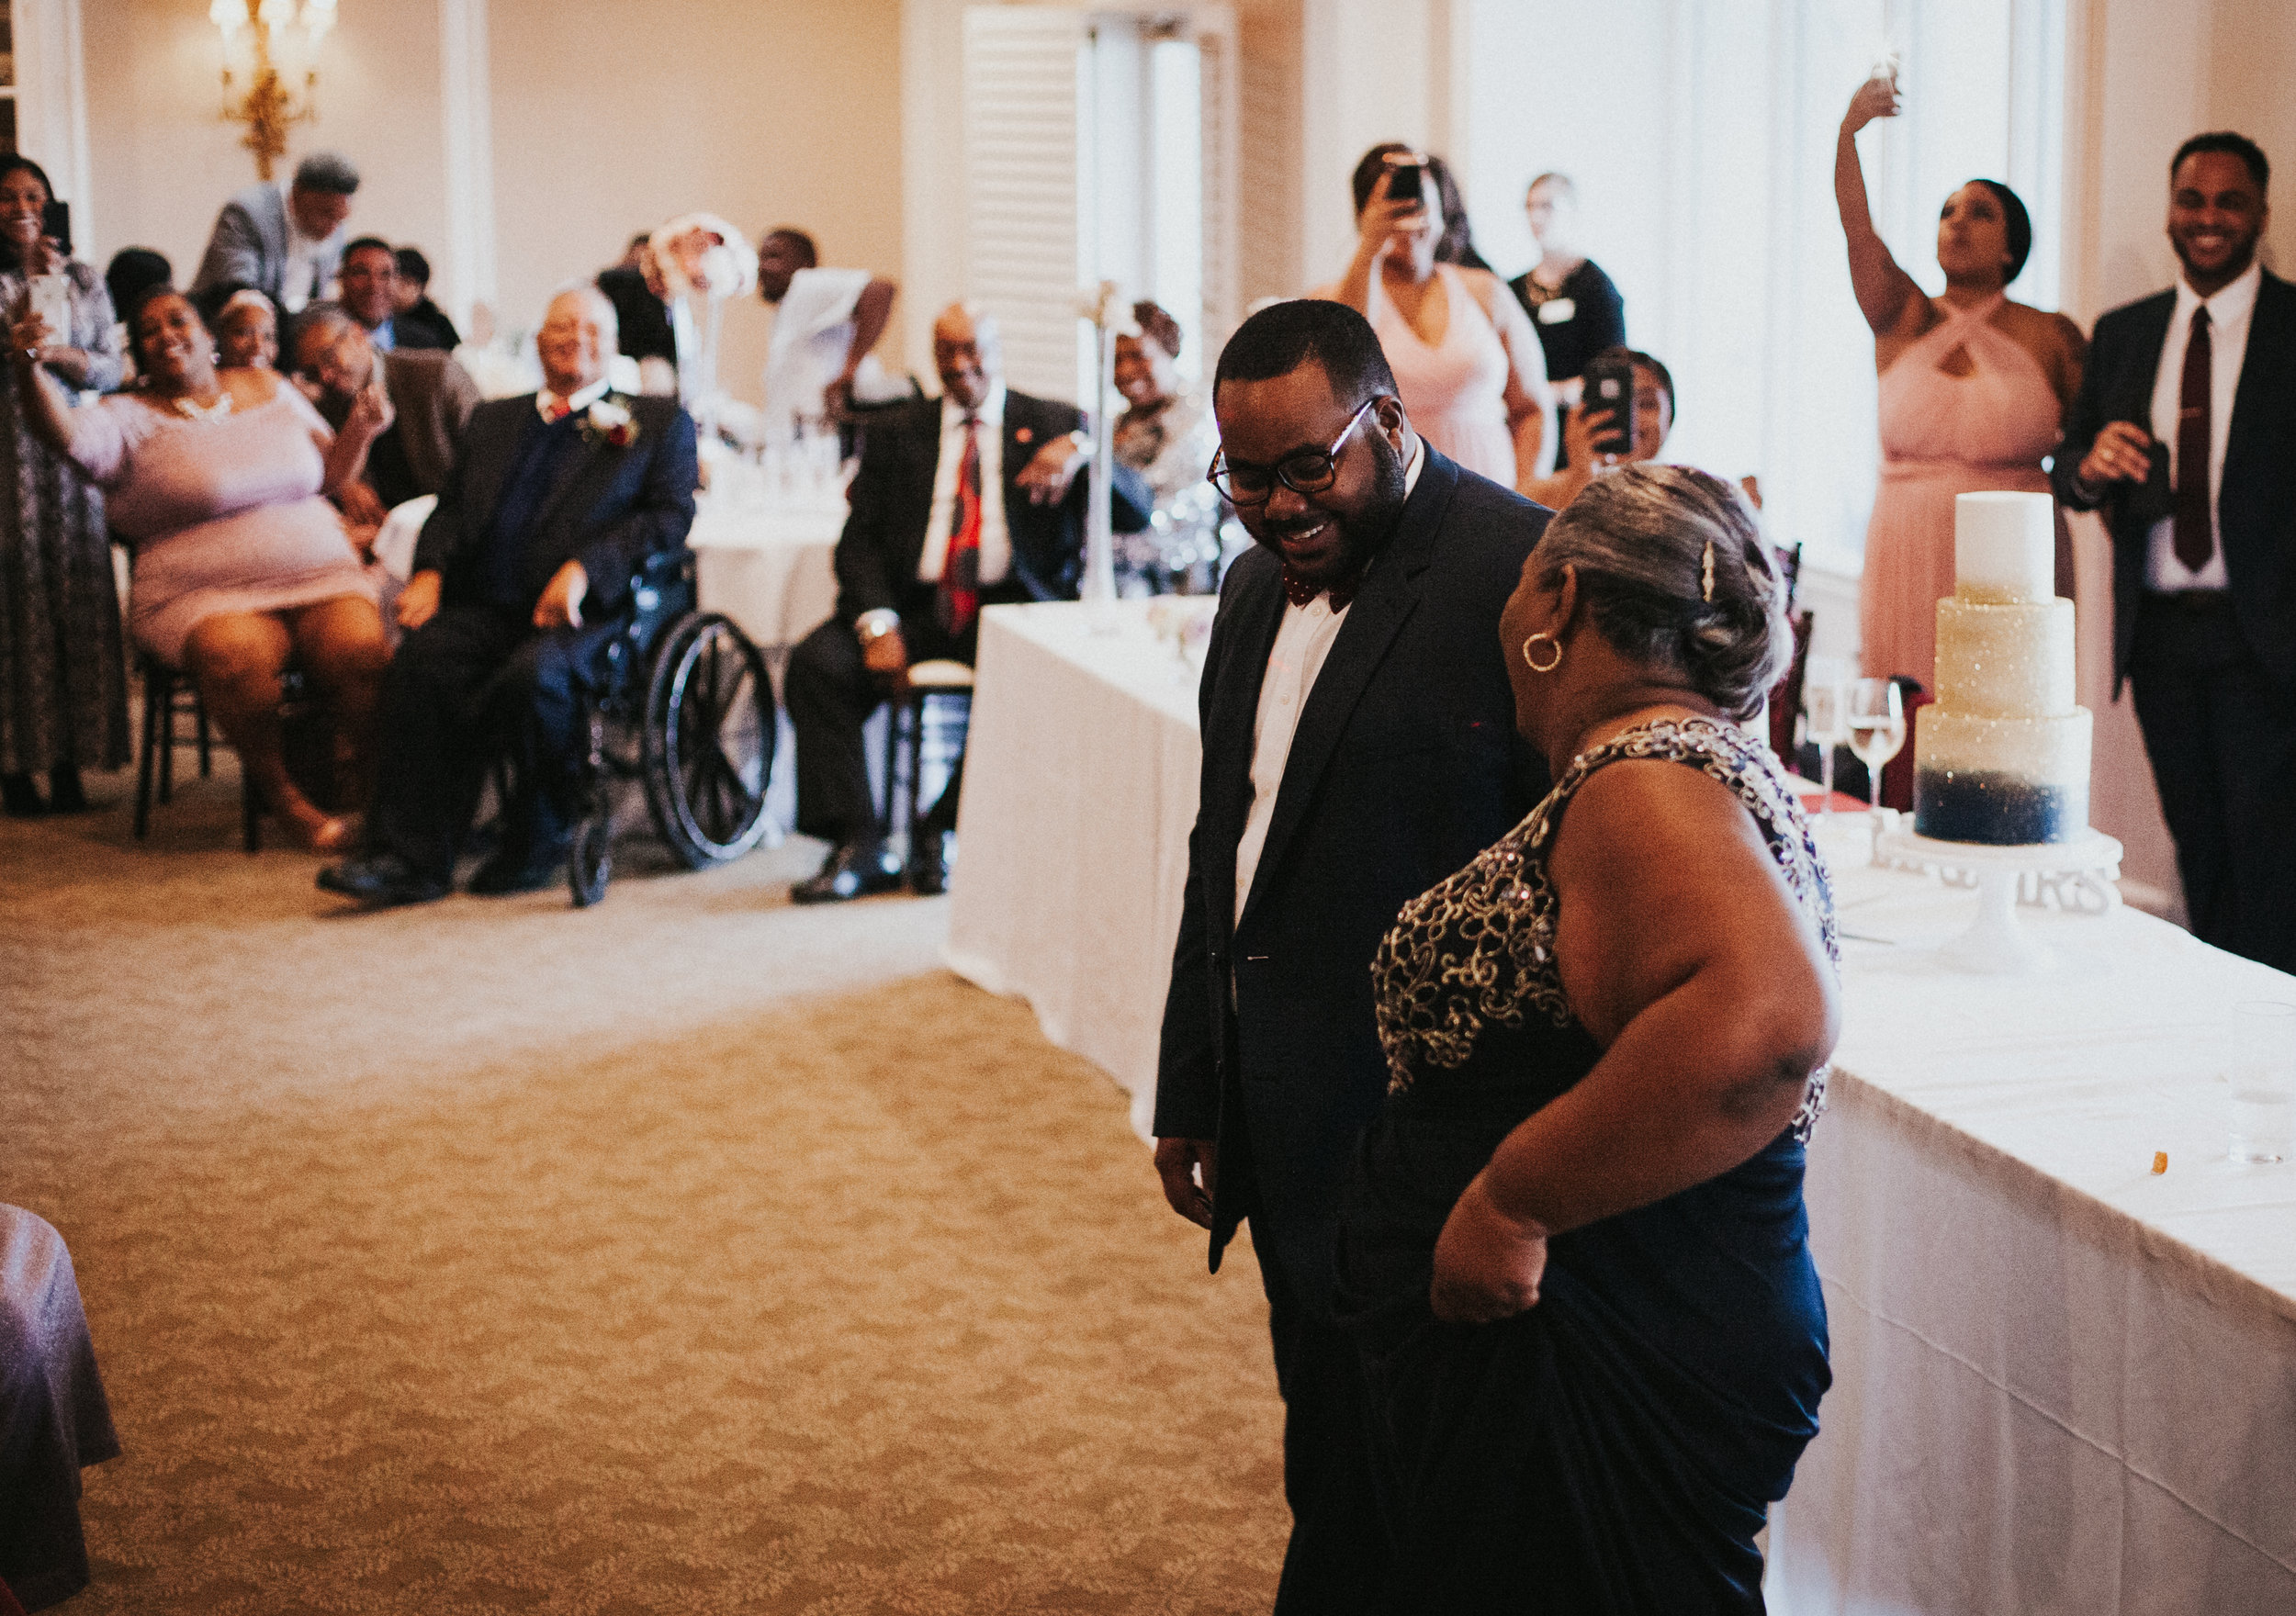  Hope Valley Country Club, Raleigh NC | Fall wedding | Wedding reception photos | Mother-Son dance photos | Marina Rey Photography 